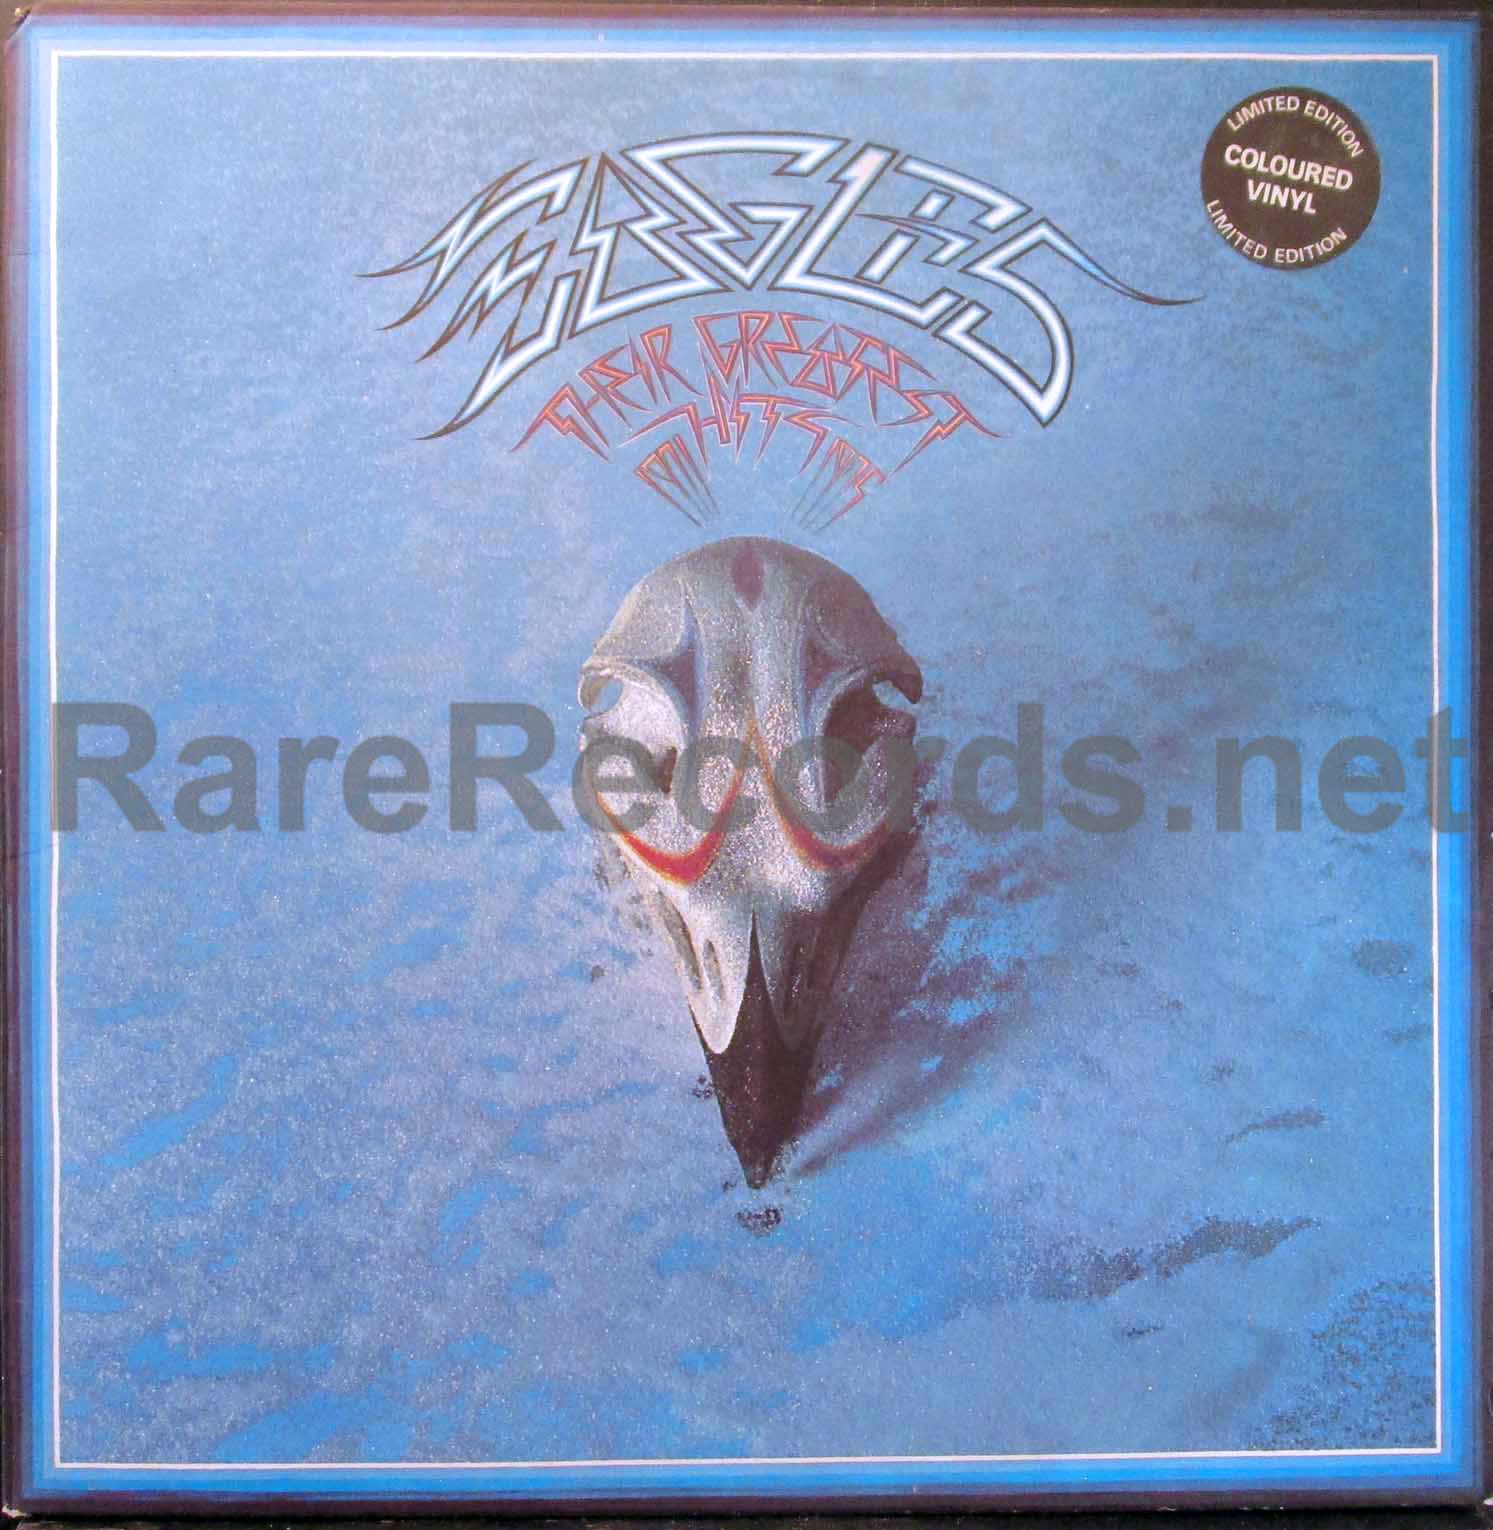 Eagles – Greatest Hits 1978 UK green vinyl LP